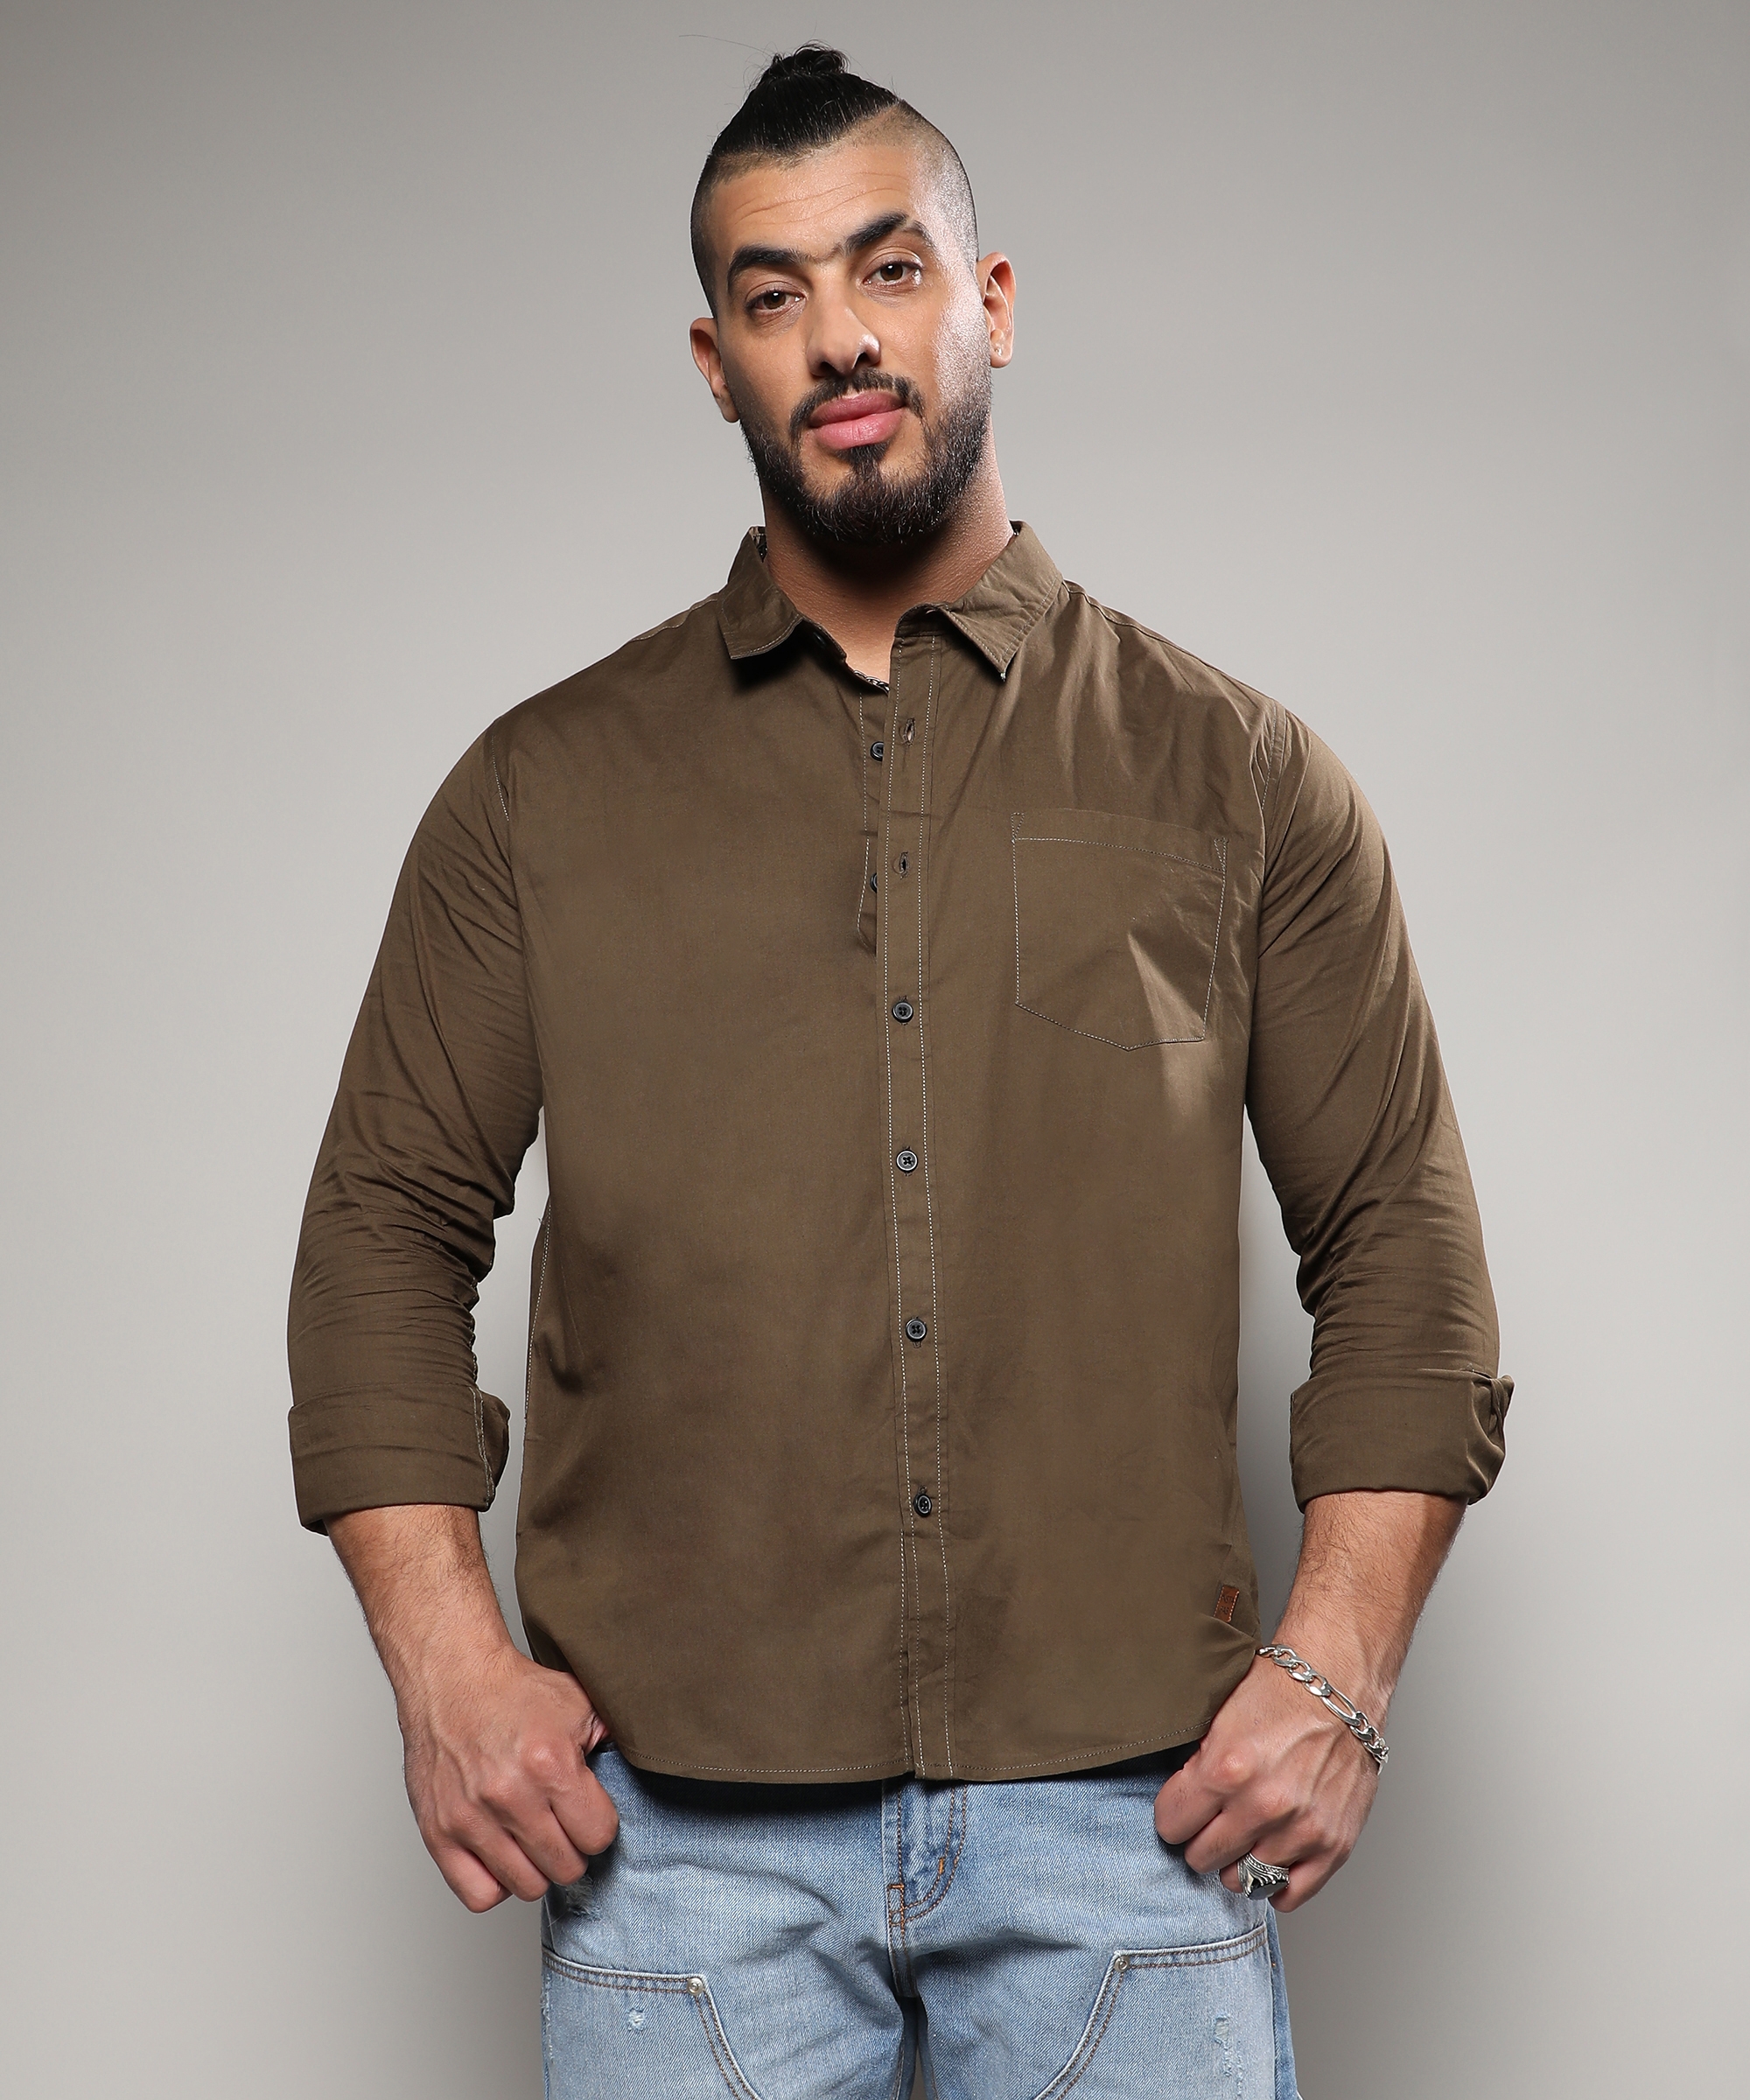 Men's Olive Green Basic Button-Up Shirt